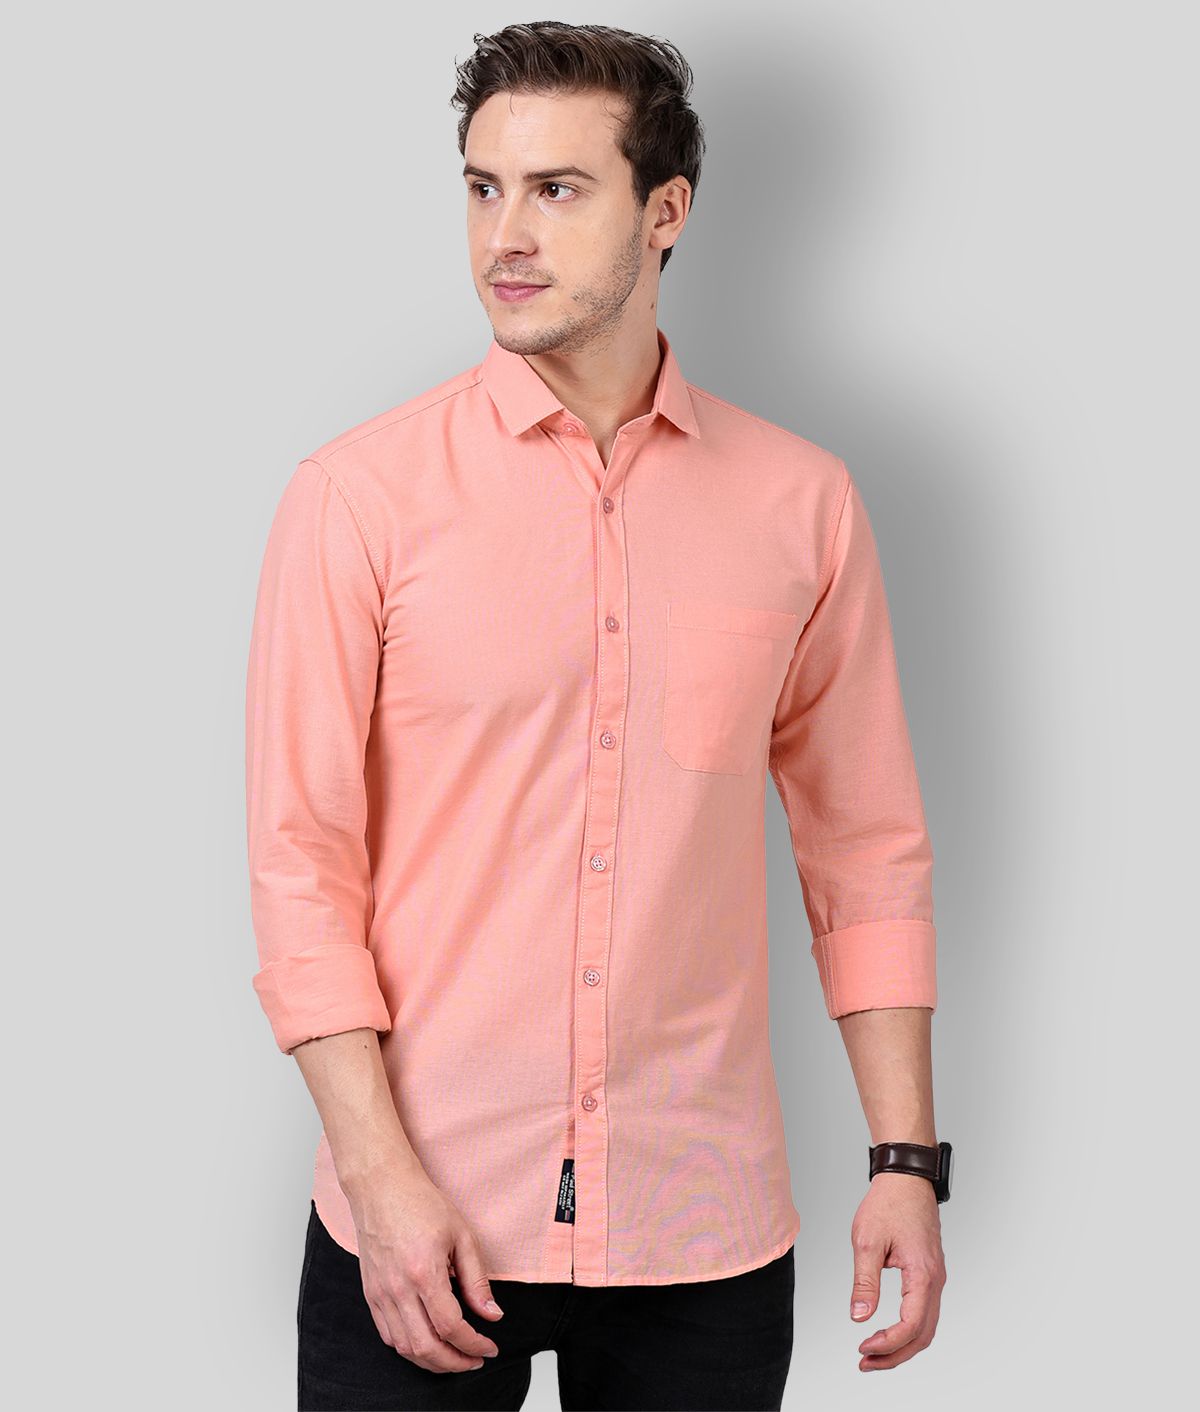 Paul Street - Pink Linen Slim Fit Men's Casual Shirt ( Pack of 1 )